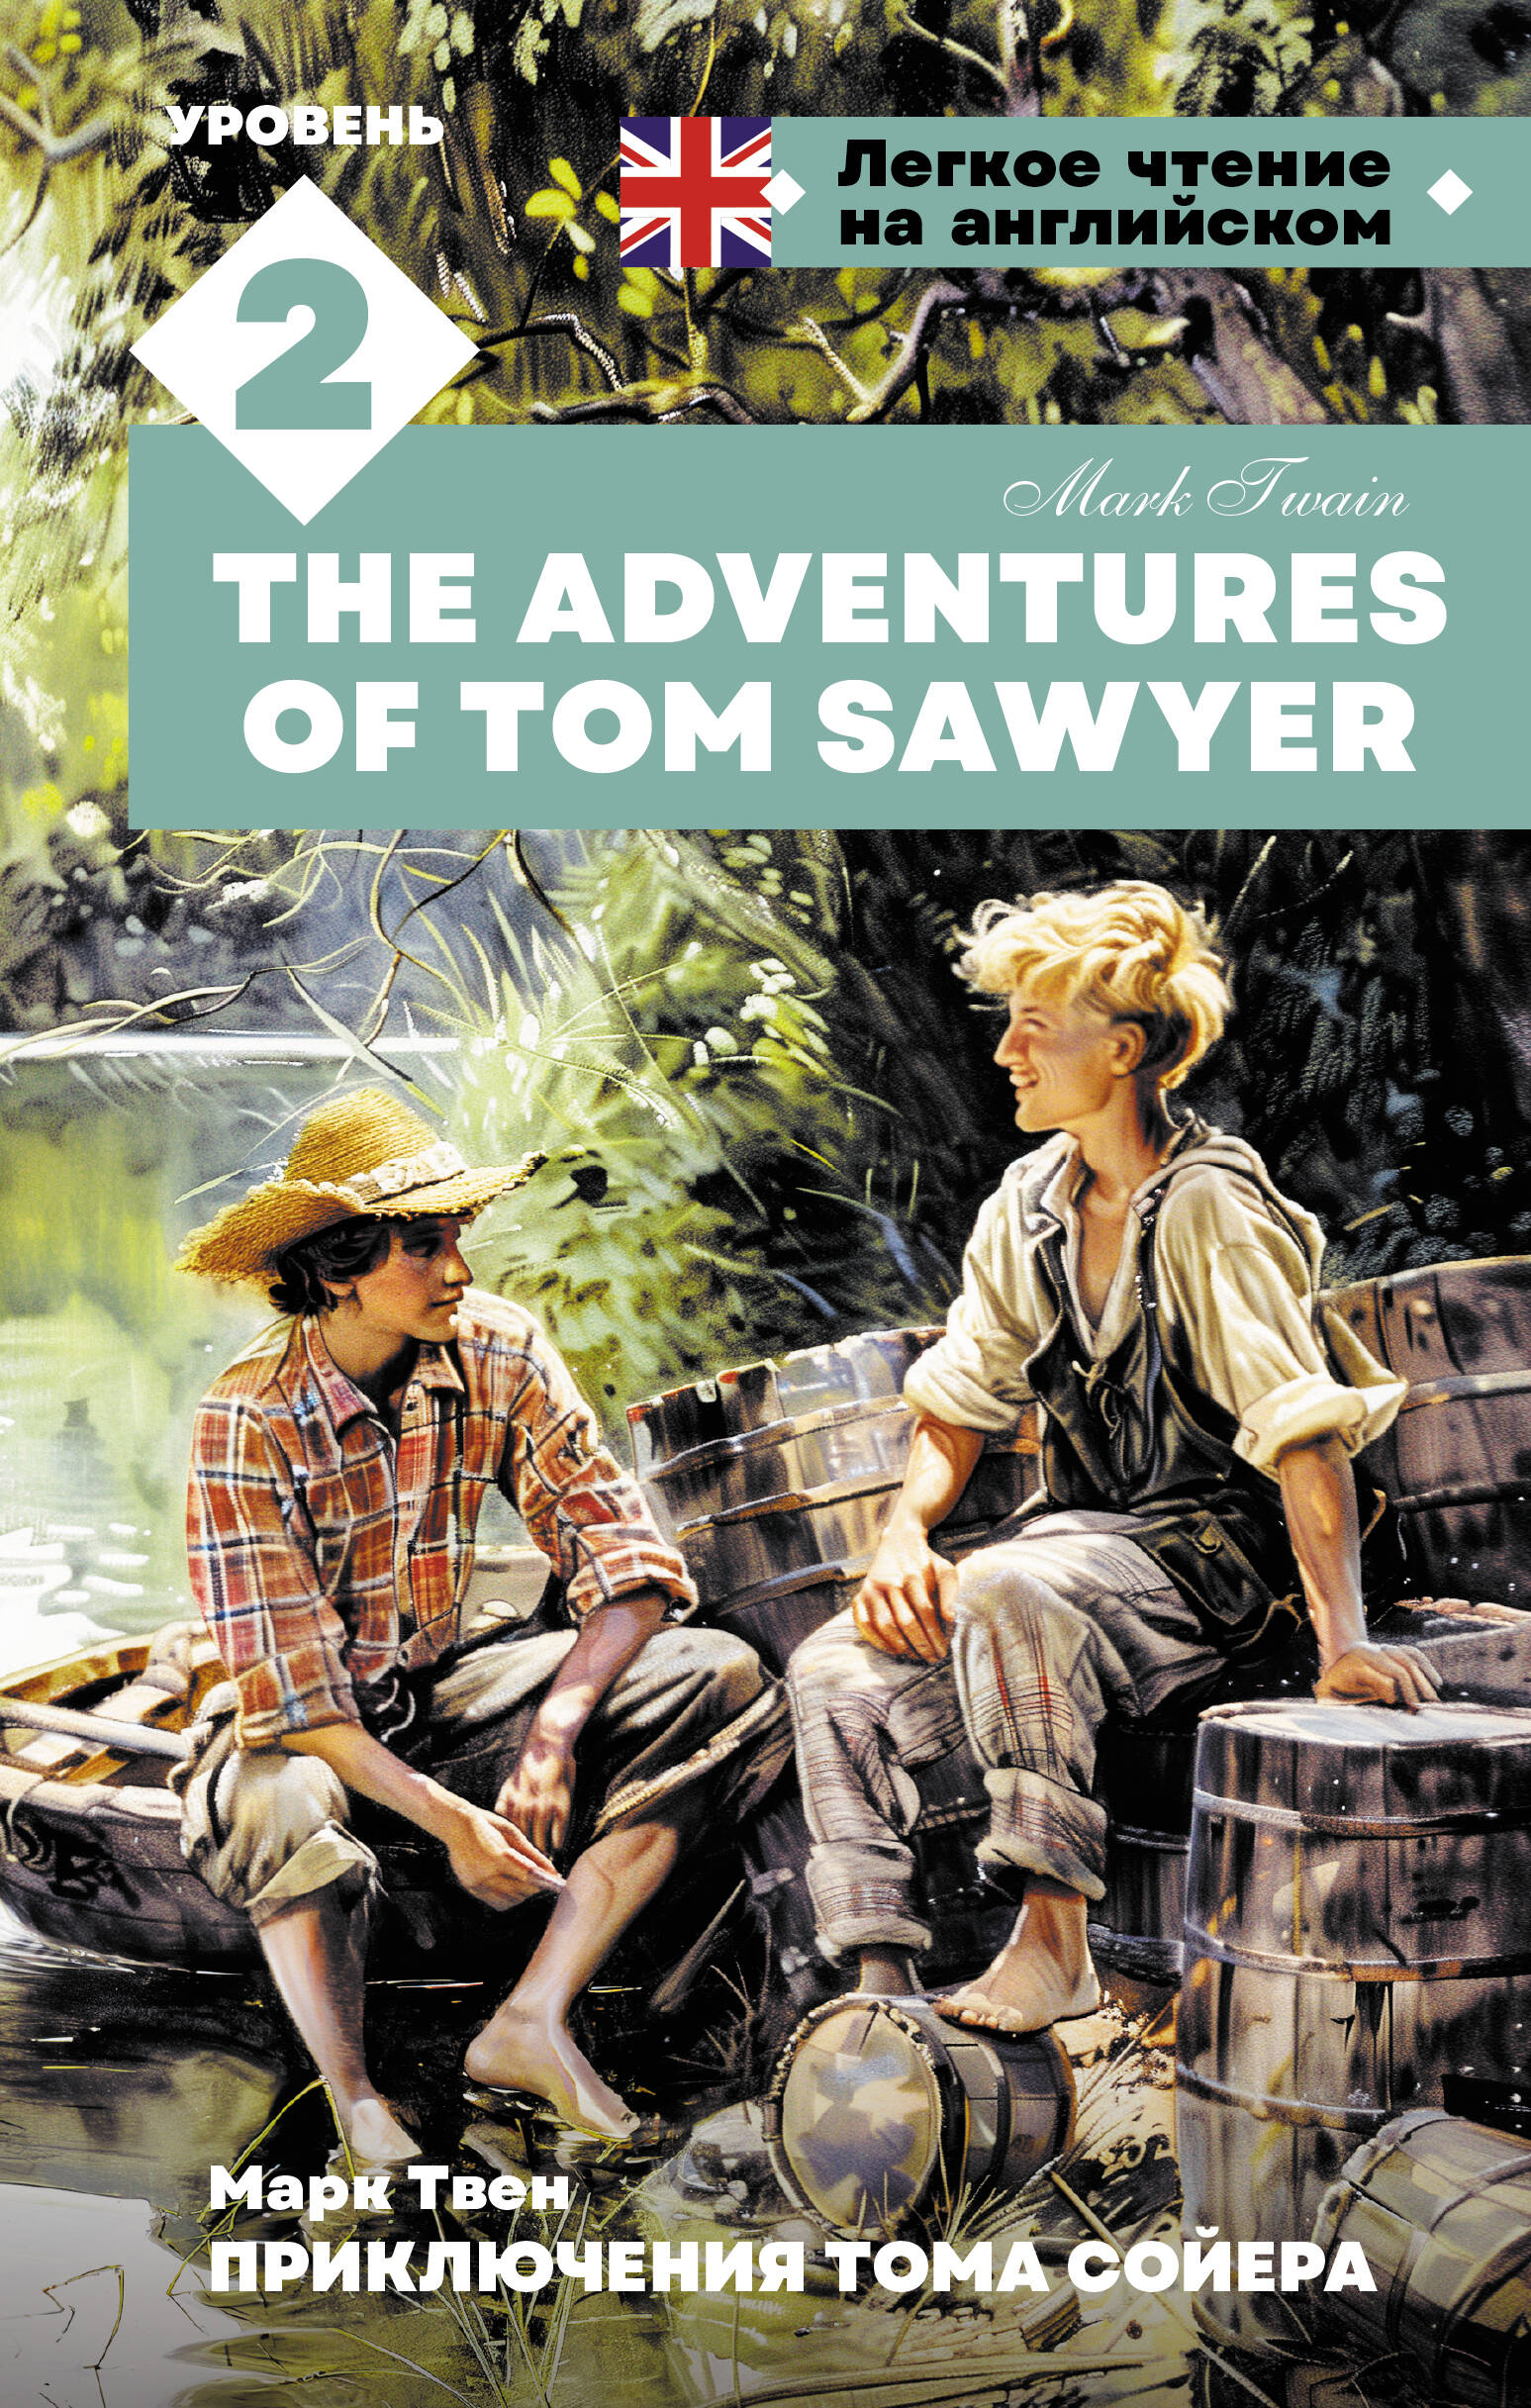   .  2 = The Adventures of Tom Sawyer